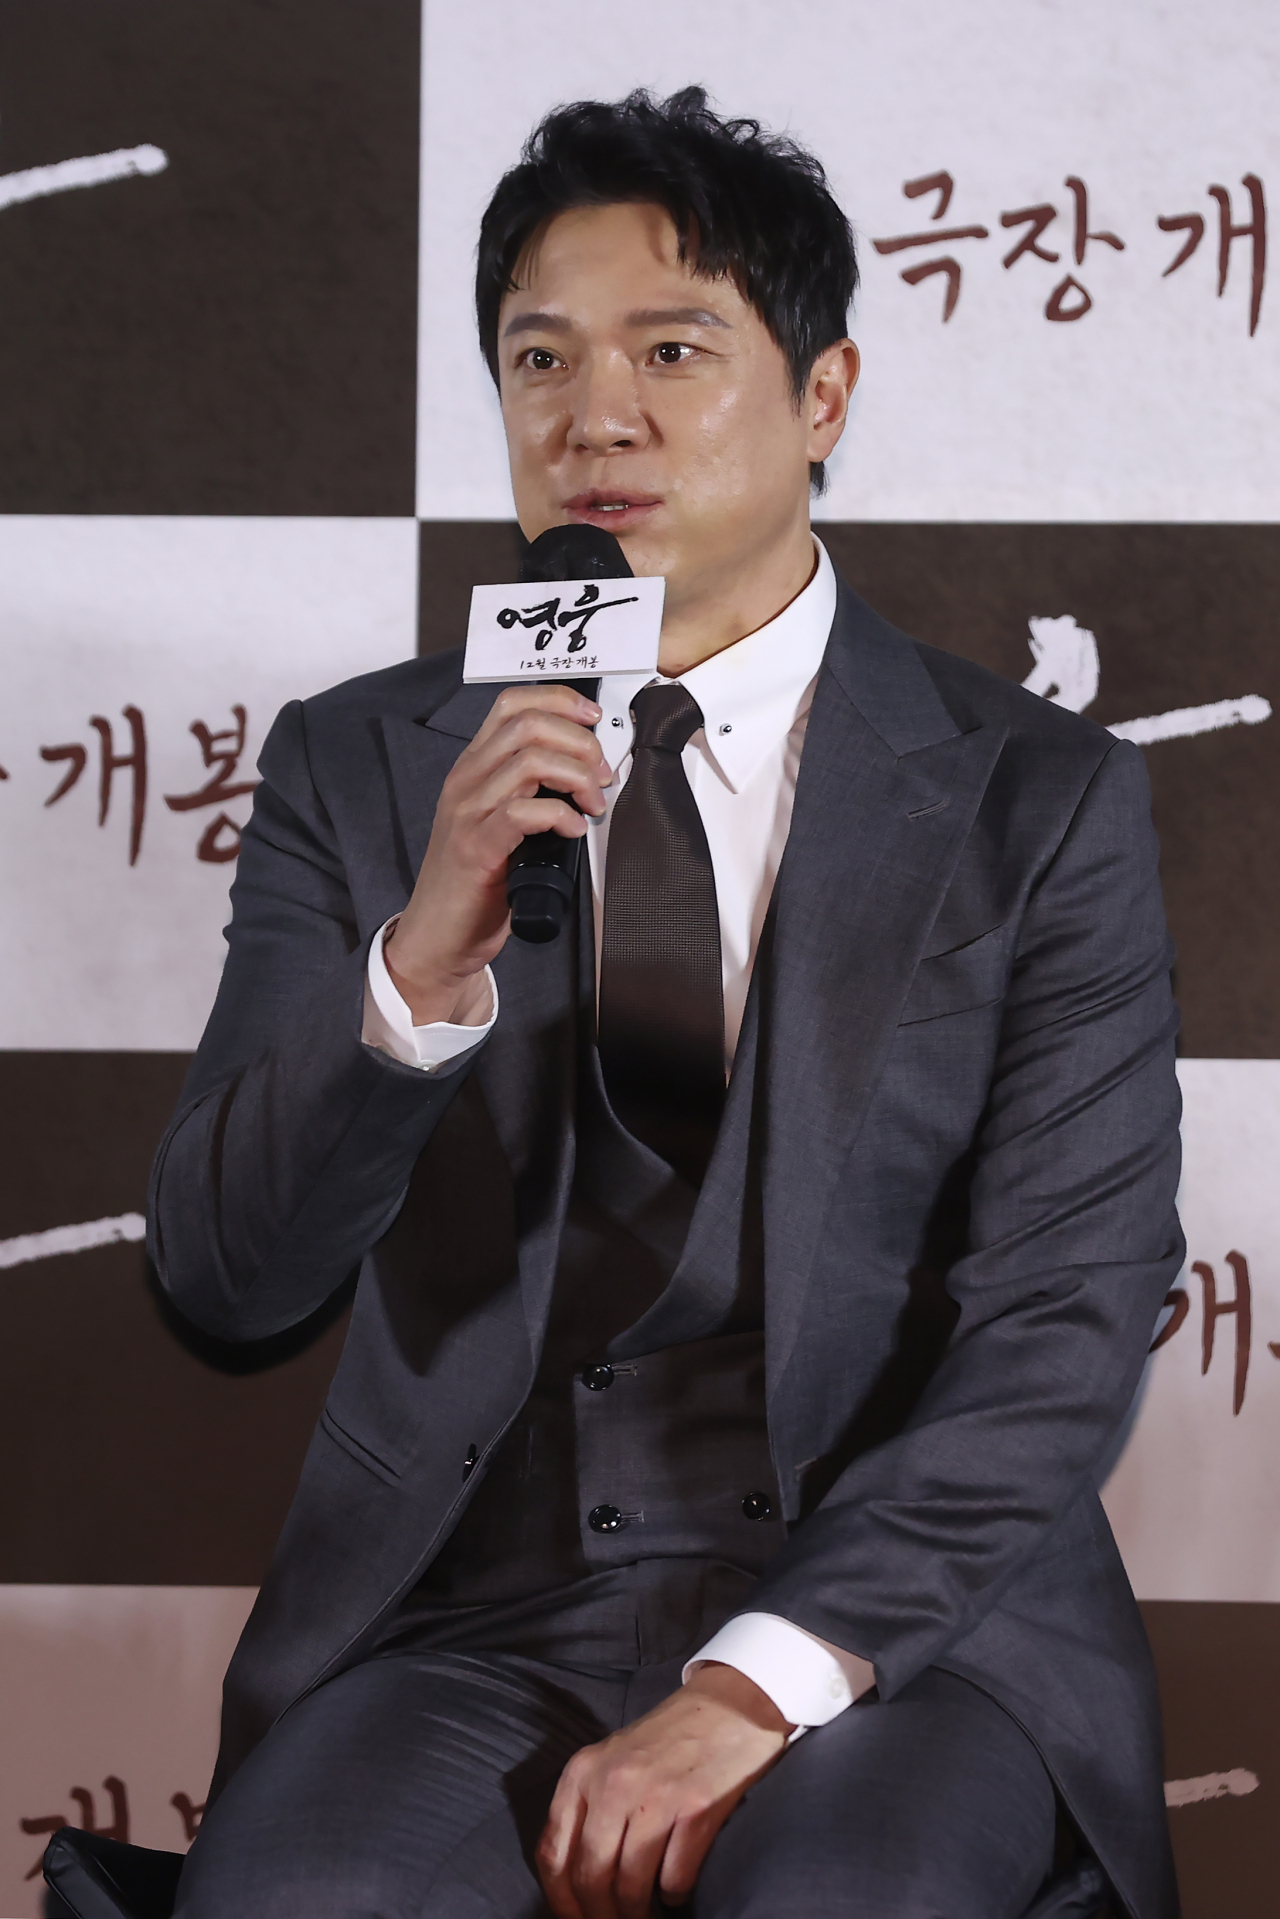 Actor Jung Sung-hwa talks during a press conference held at CGV Yongsan on Monday. (Yonhap)